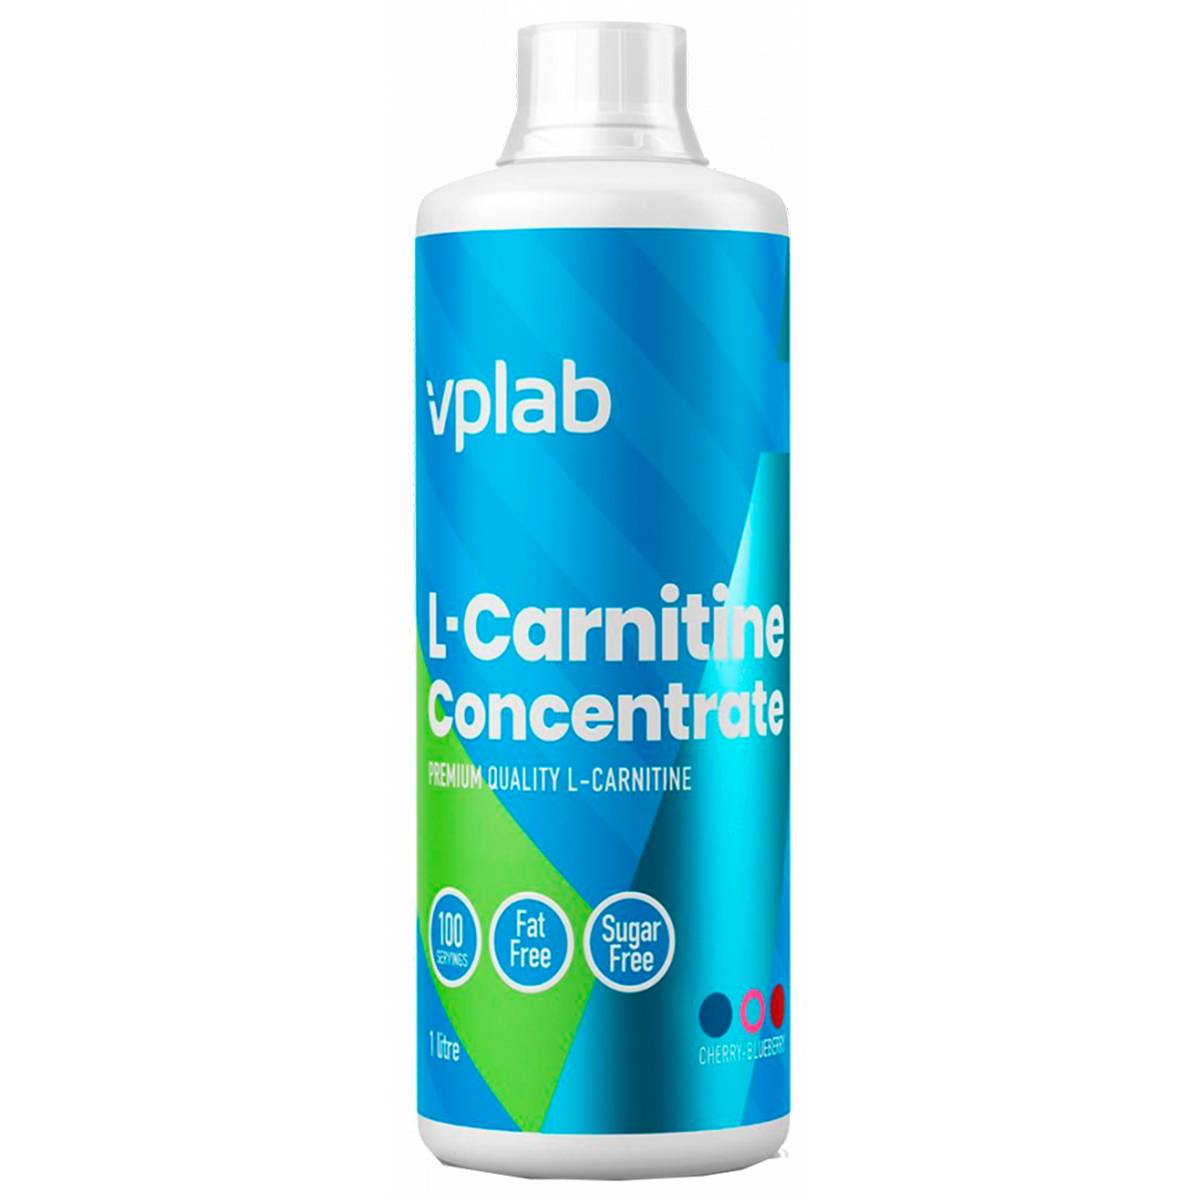 L-carnitine concentrate от vplab как принимать состав и отзывы